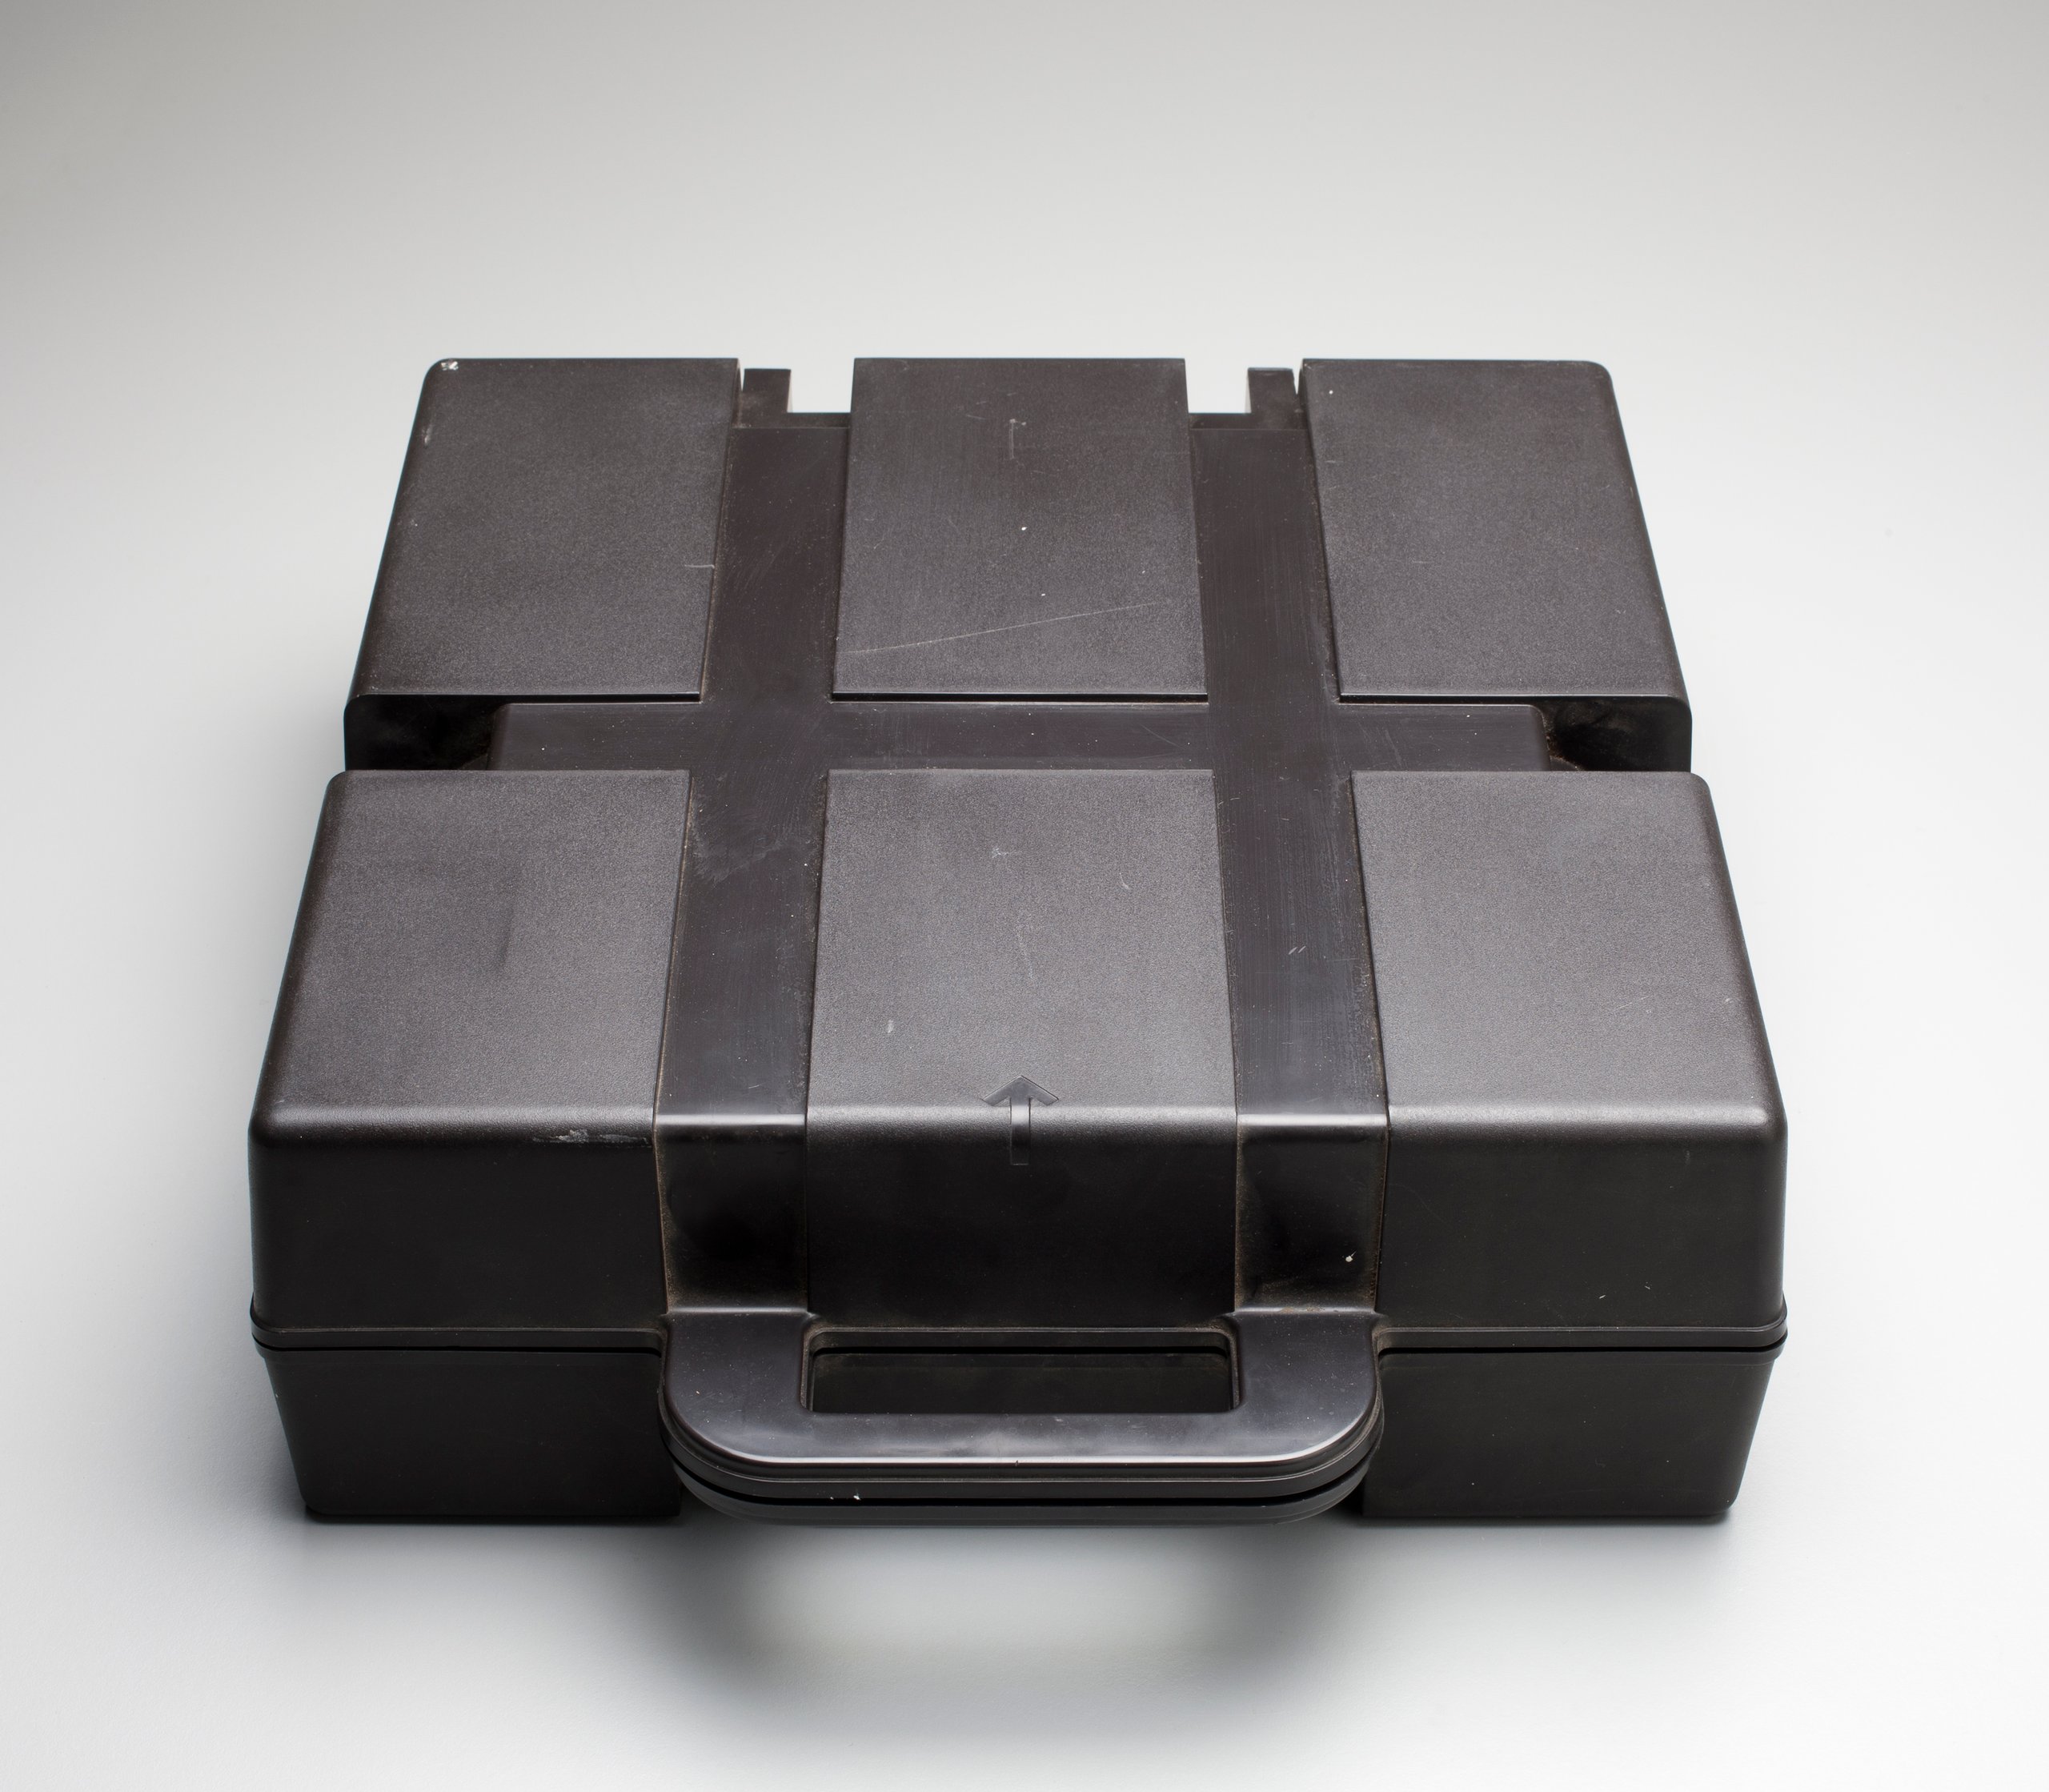 Olivetti 'Lettera 35' portable typewriter